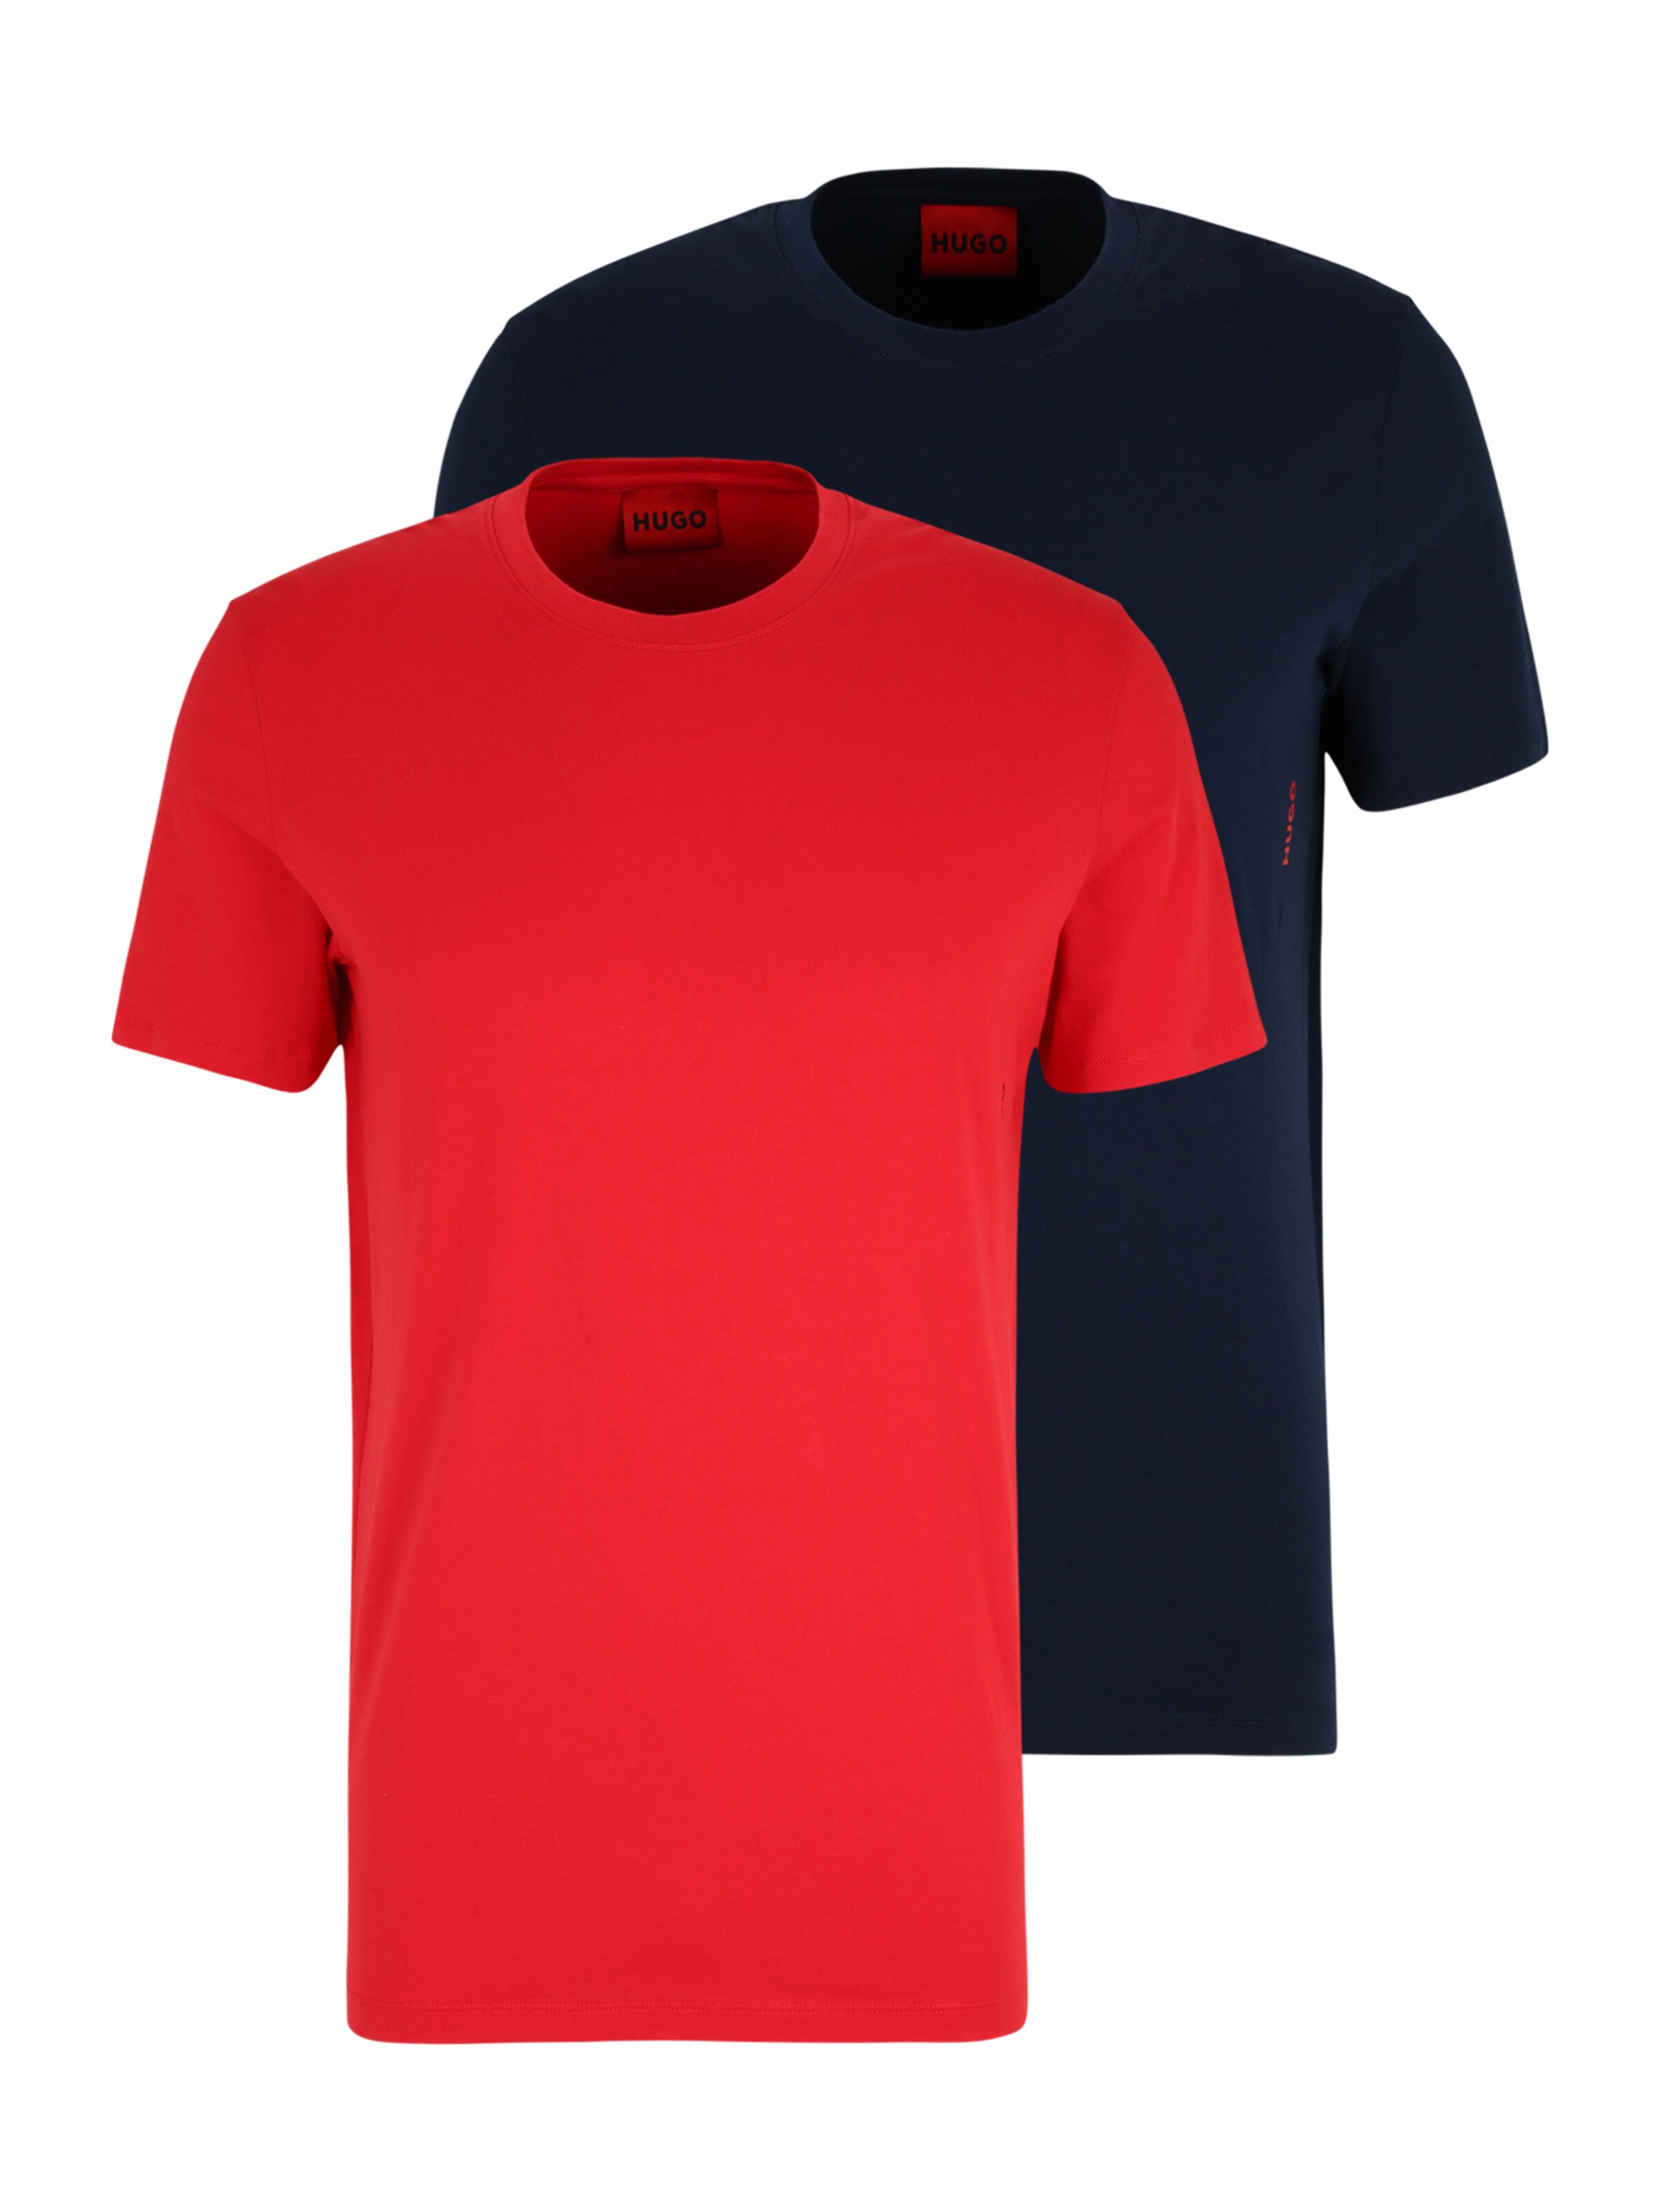 Männer Shirts HUGO T-Shirt in Dunkelblau, Rot - YK21865